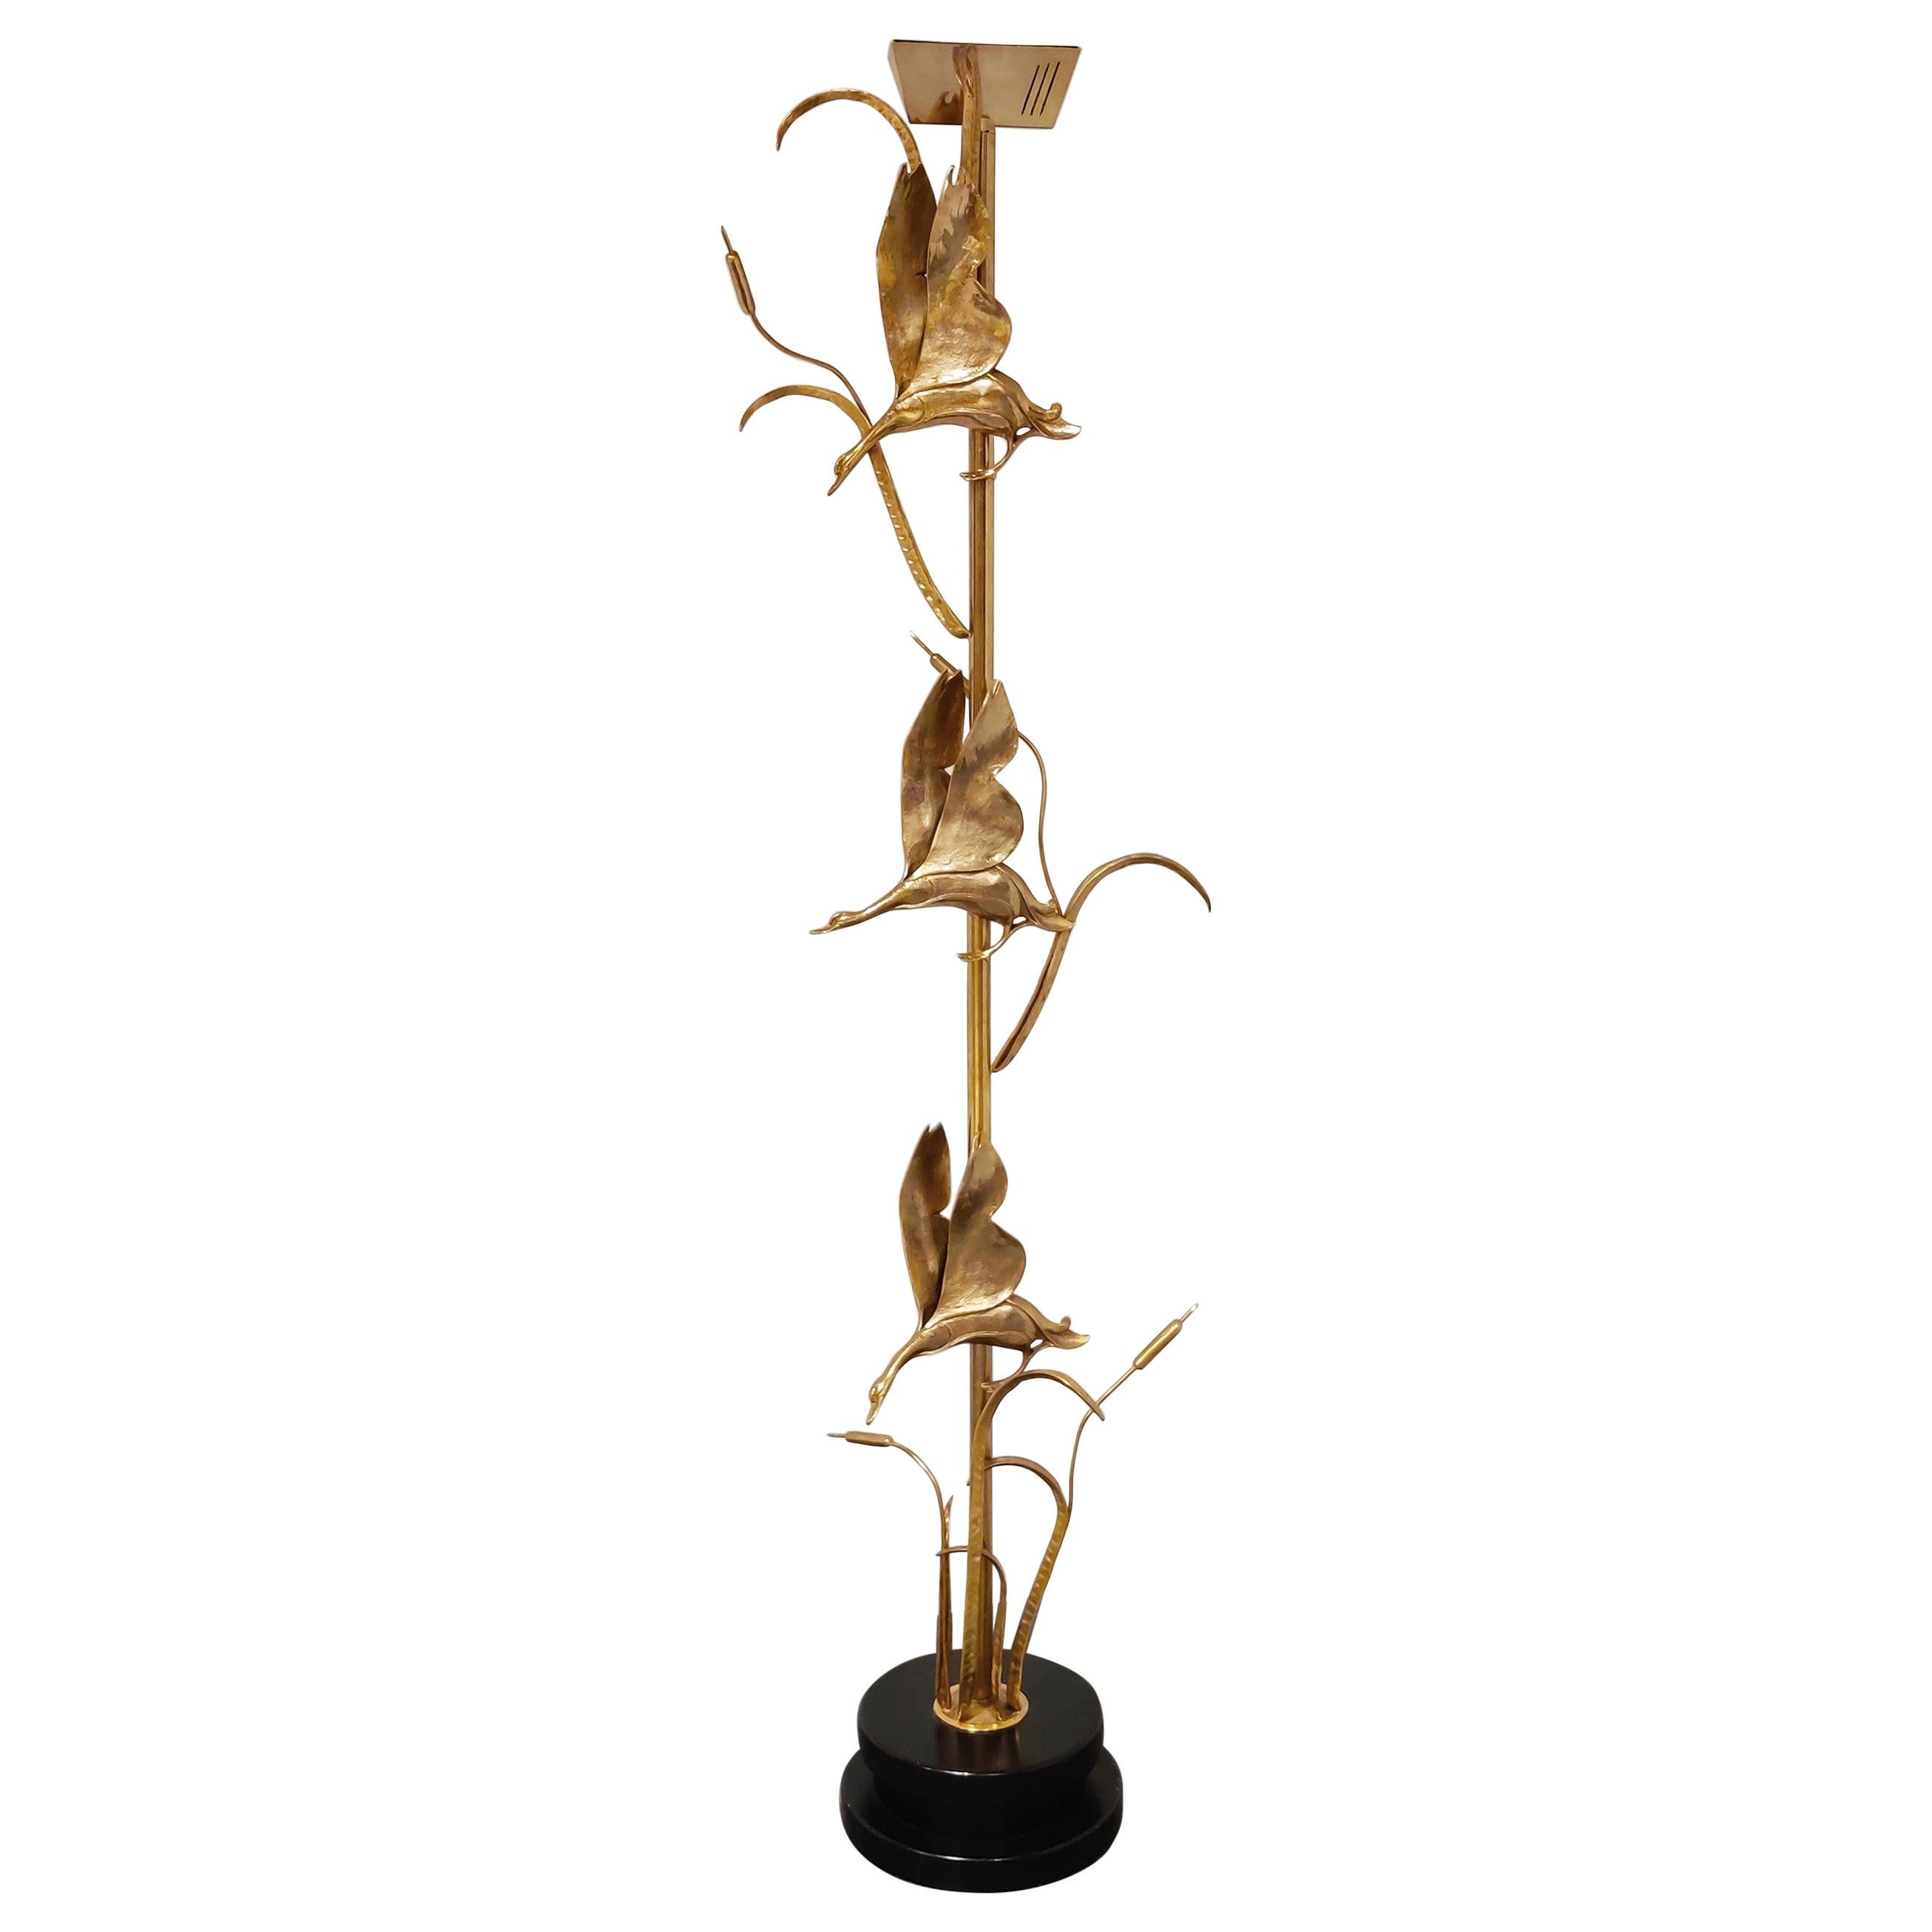 Brass Heron Floor Lamp by L. Galeotti for L'originale, 1970s